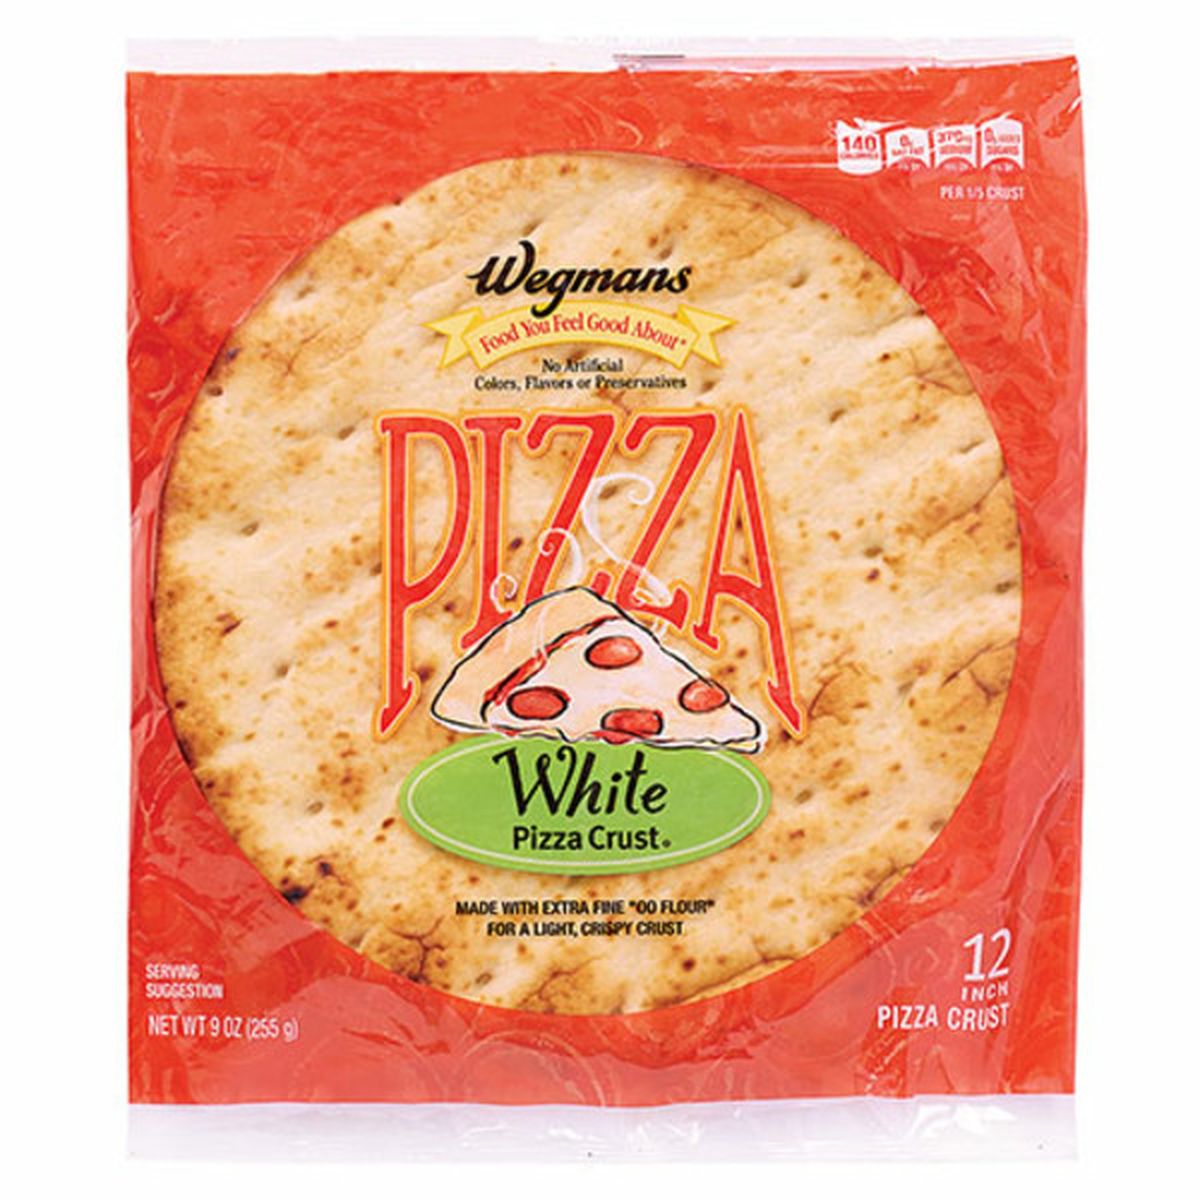 Calories in Wegmans White Pizza Crust, 12 Inch